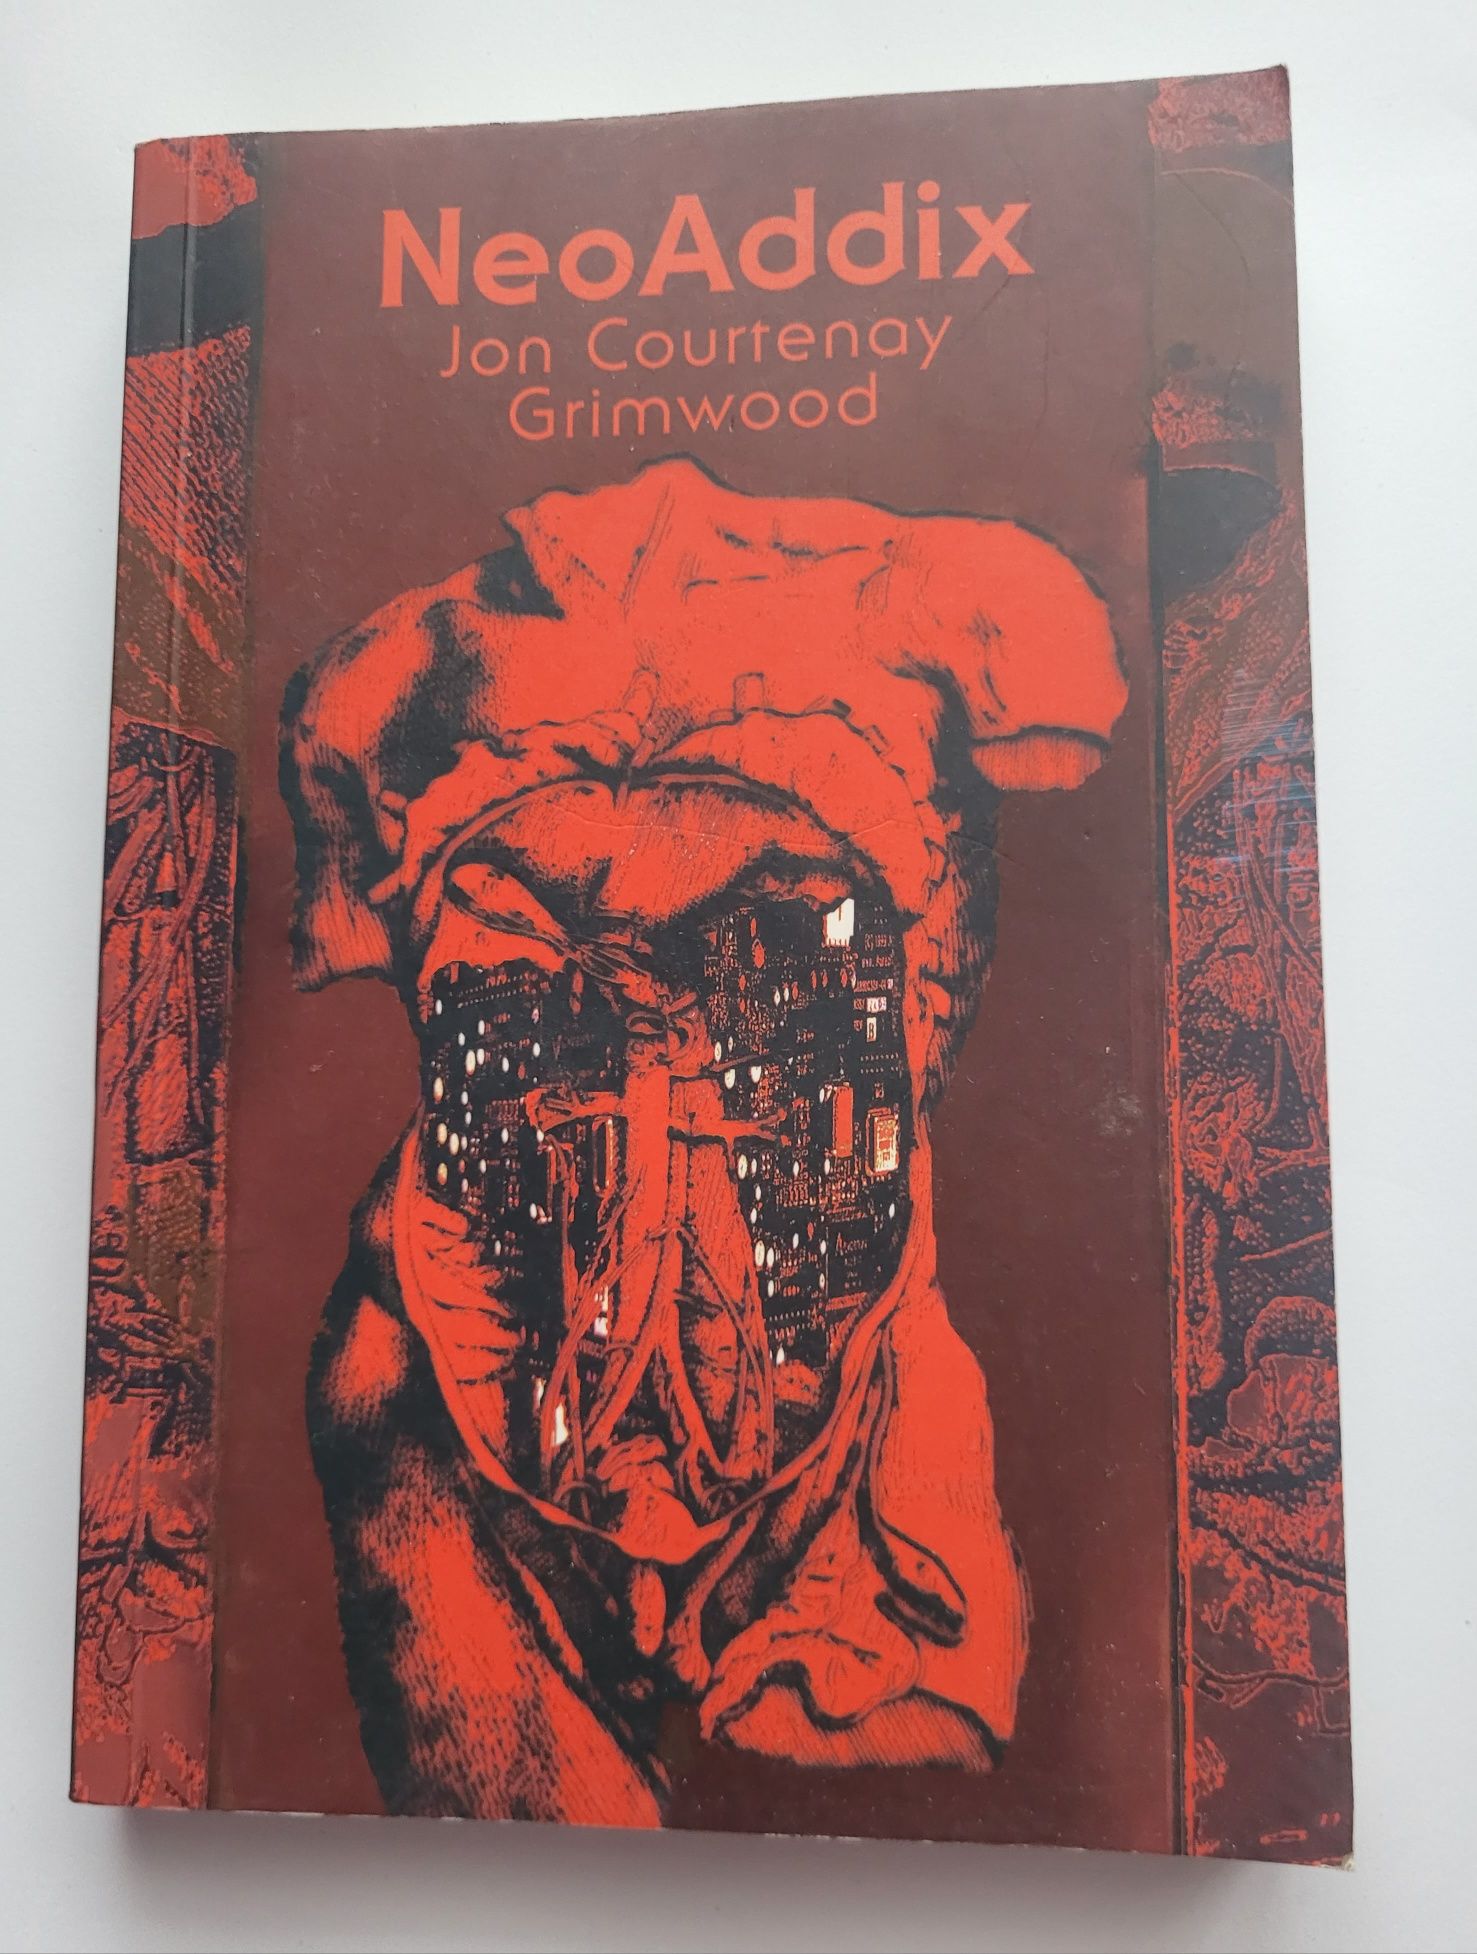 NeoAddix - Jon Courtenay Grimwood